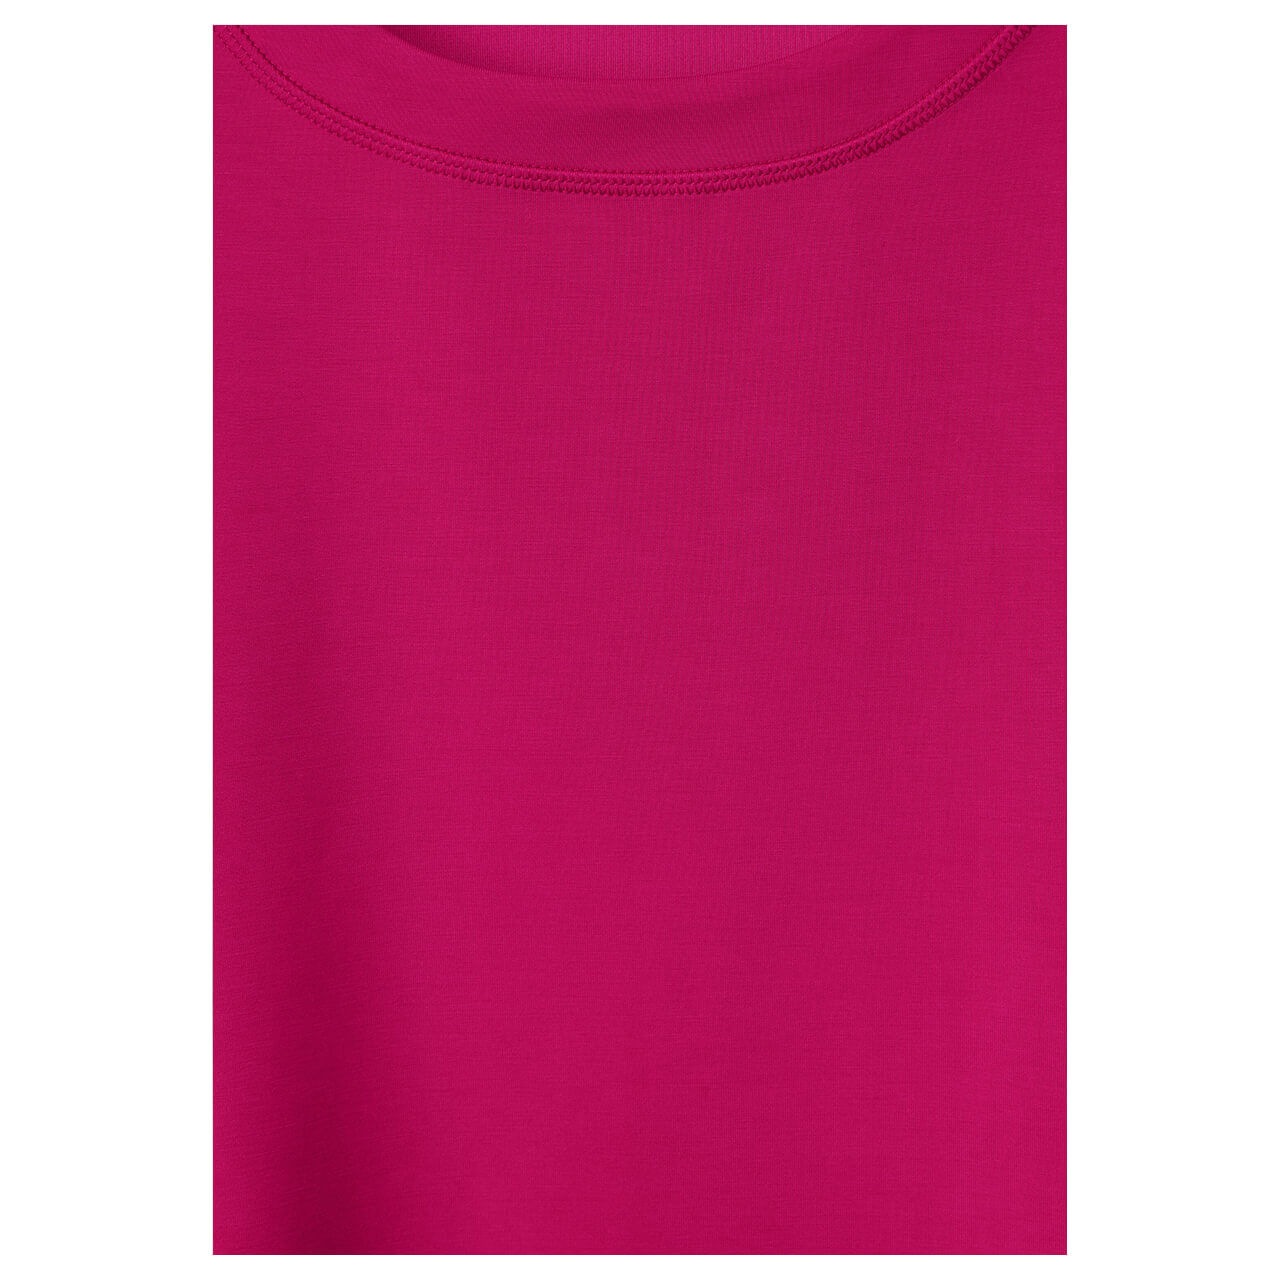 Cecil Damen Kurzarm Sweatshirt pink sorbet